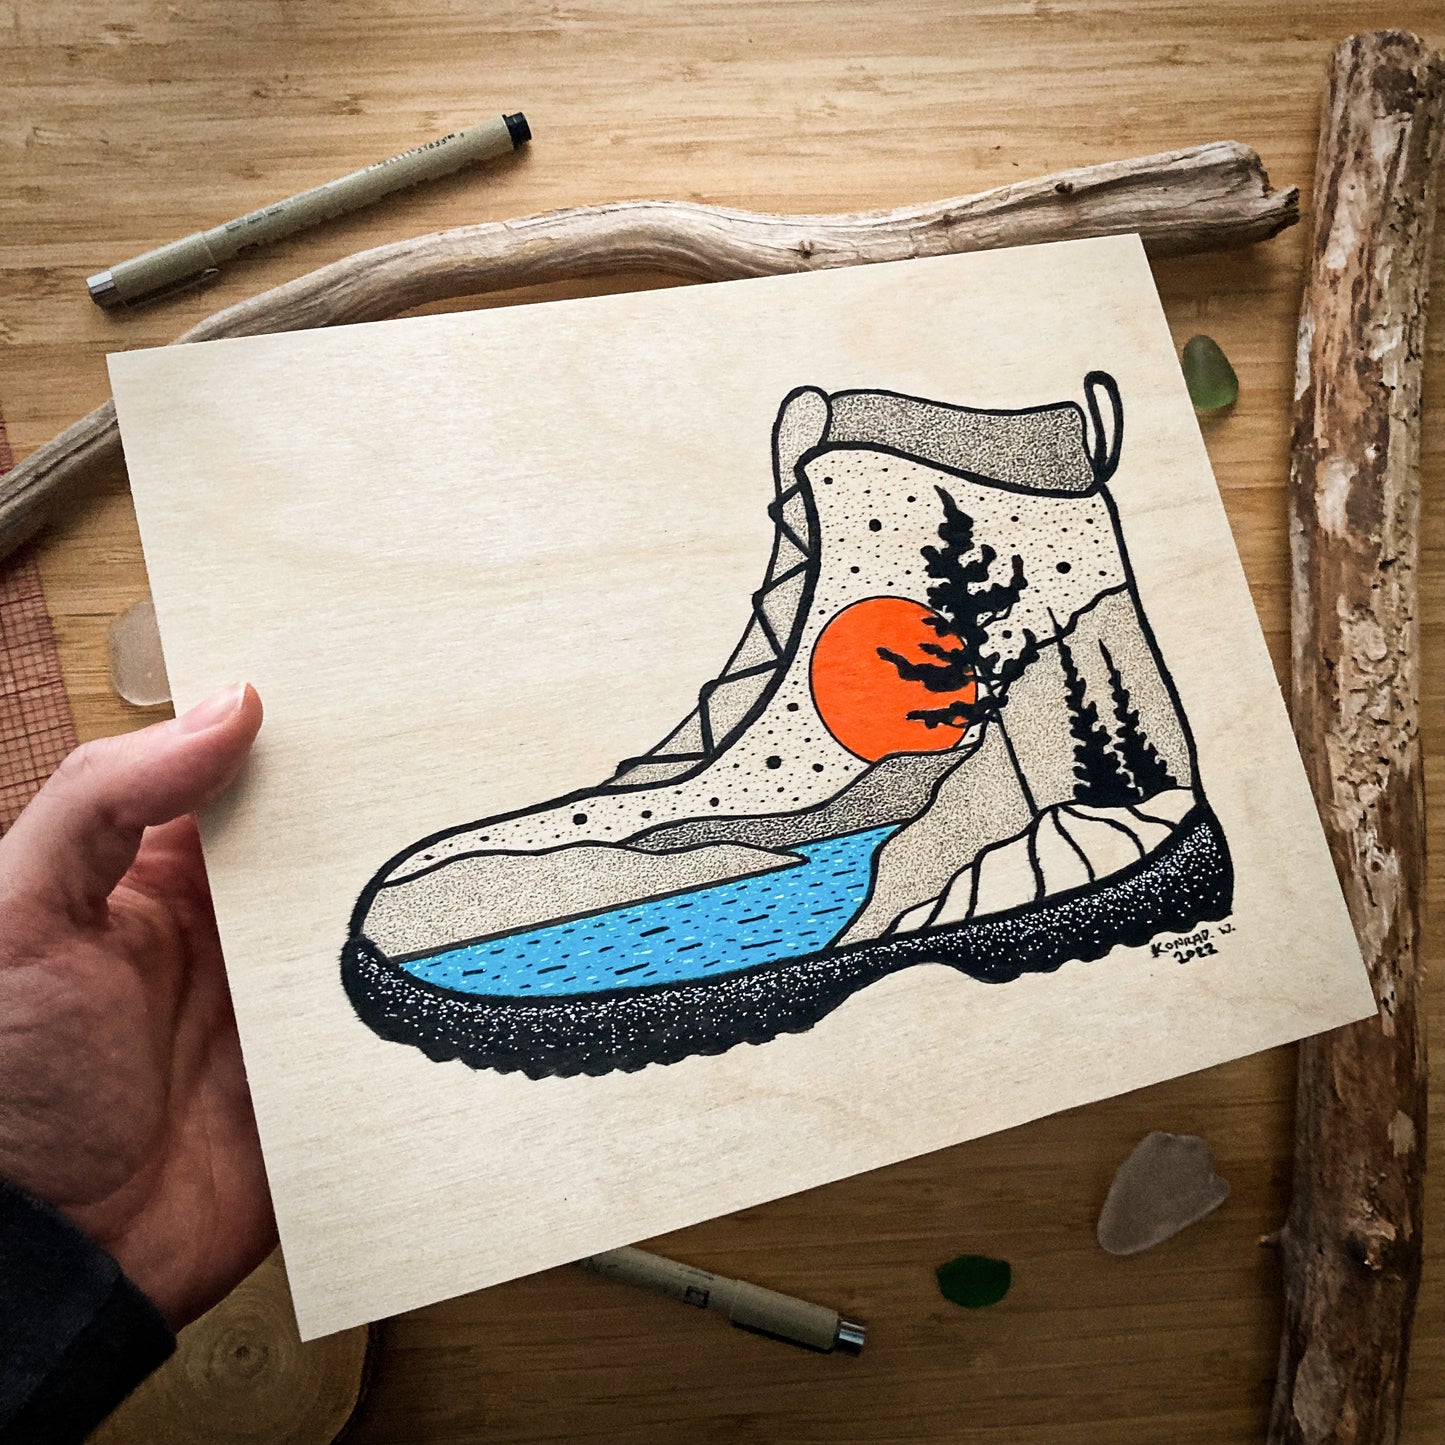 Hiking Boot - ORIGINAL 8x10 Wood Panel Illustration